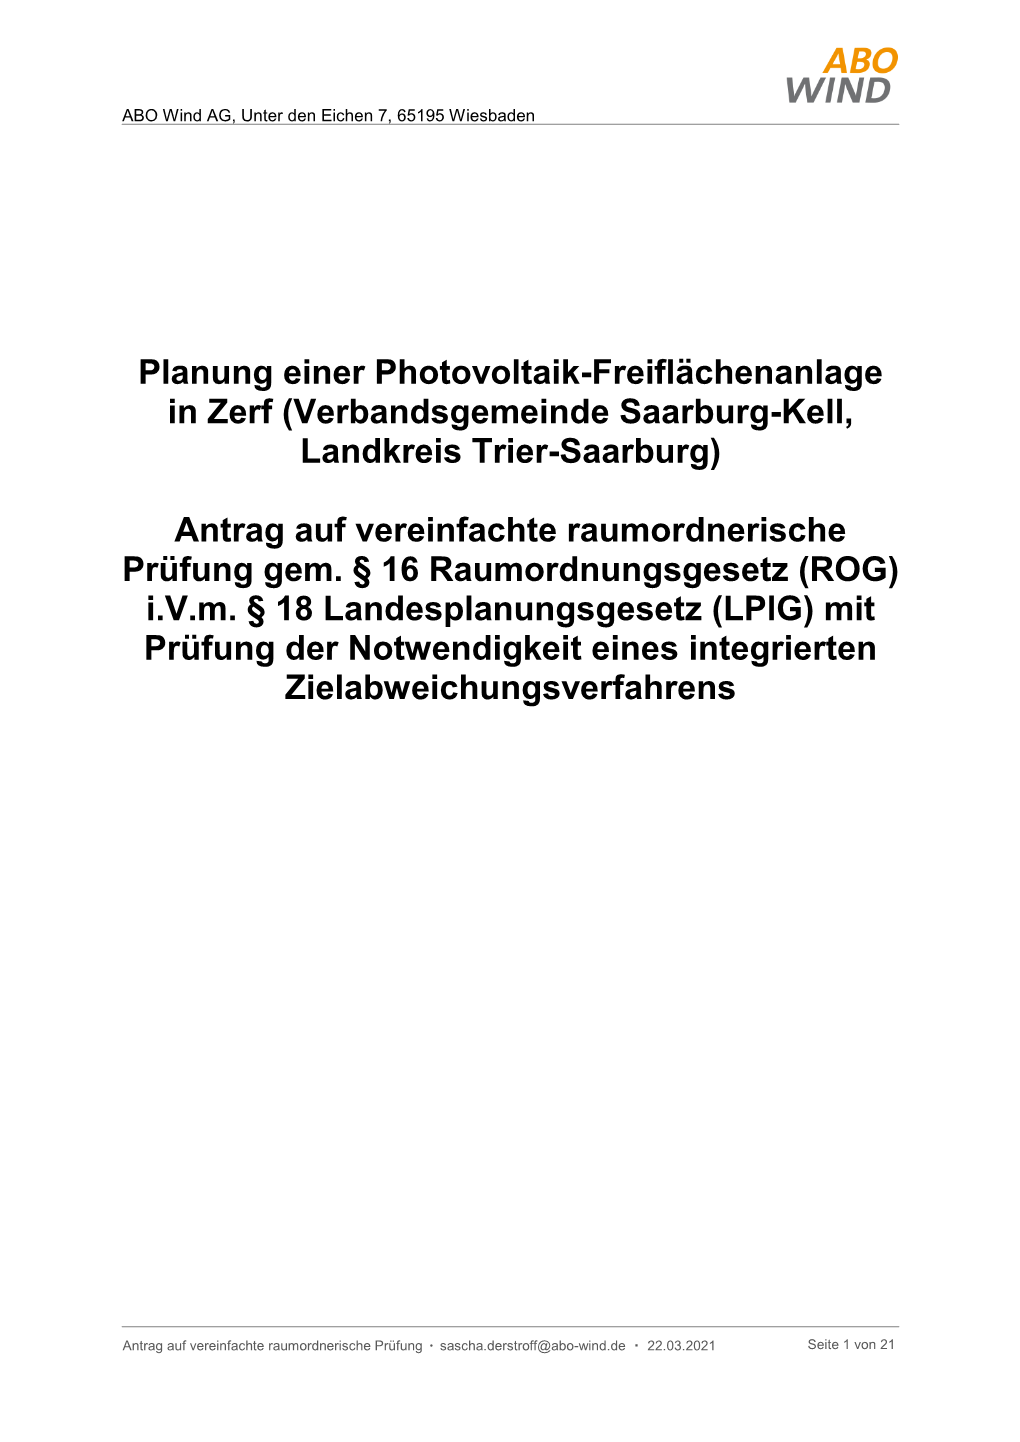 Planung Einer Photovoltaik-Freiflächenanlage in Zerf (Verbandsgemeinde Saarburg-Kell, Landkreis Trier-Saarburg)